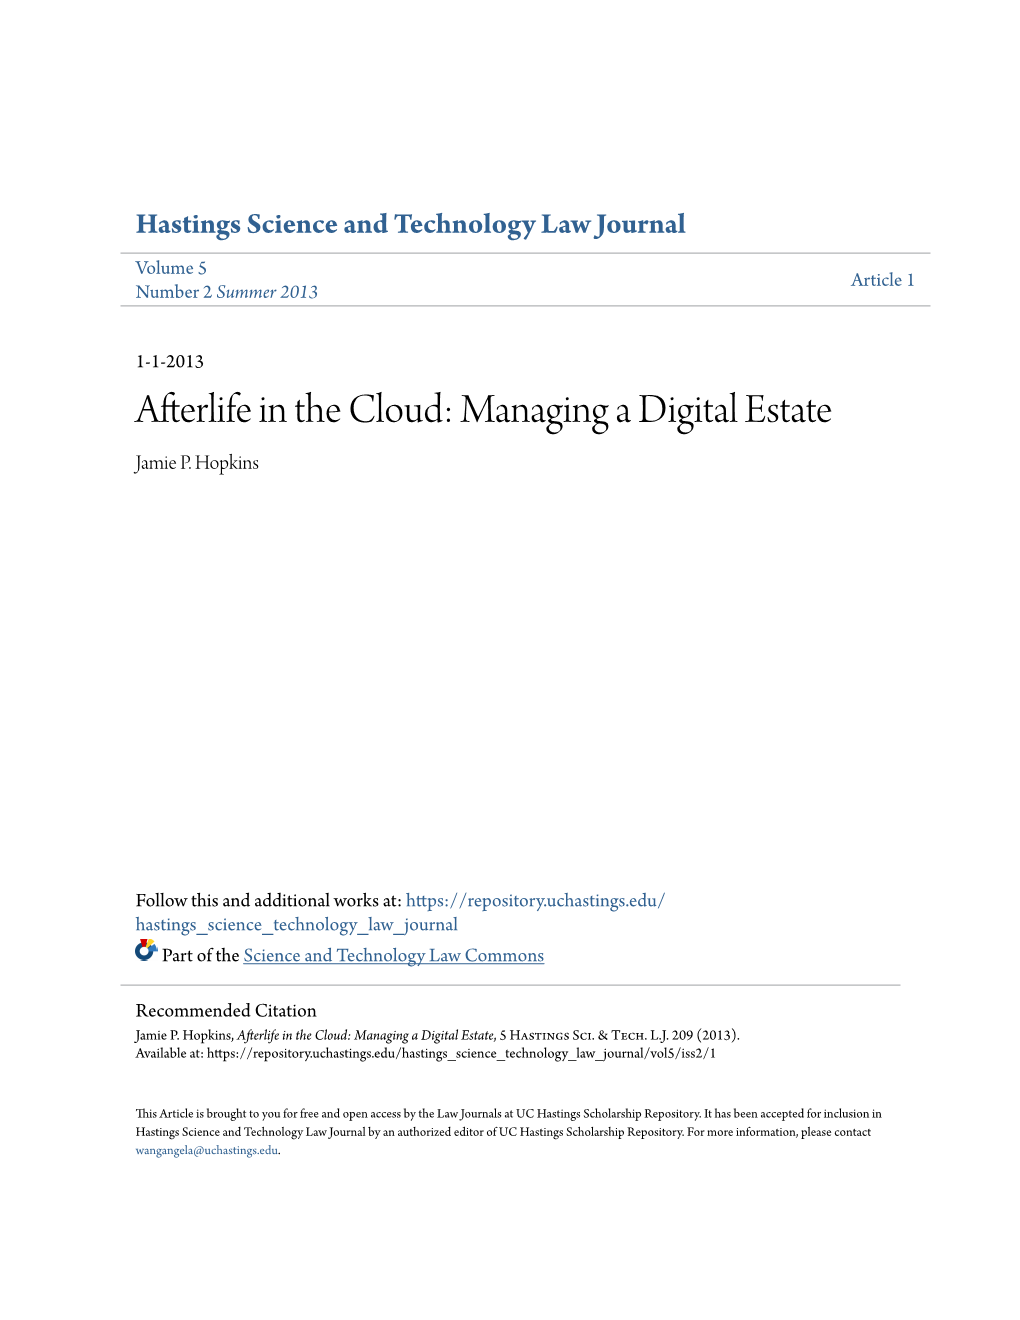 Afterlife in the Cloud: Managing a Digital Estate Jamie P